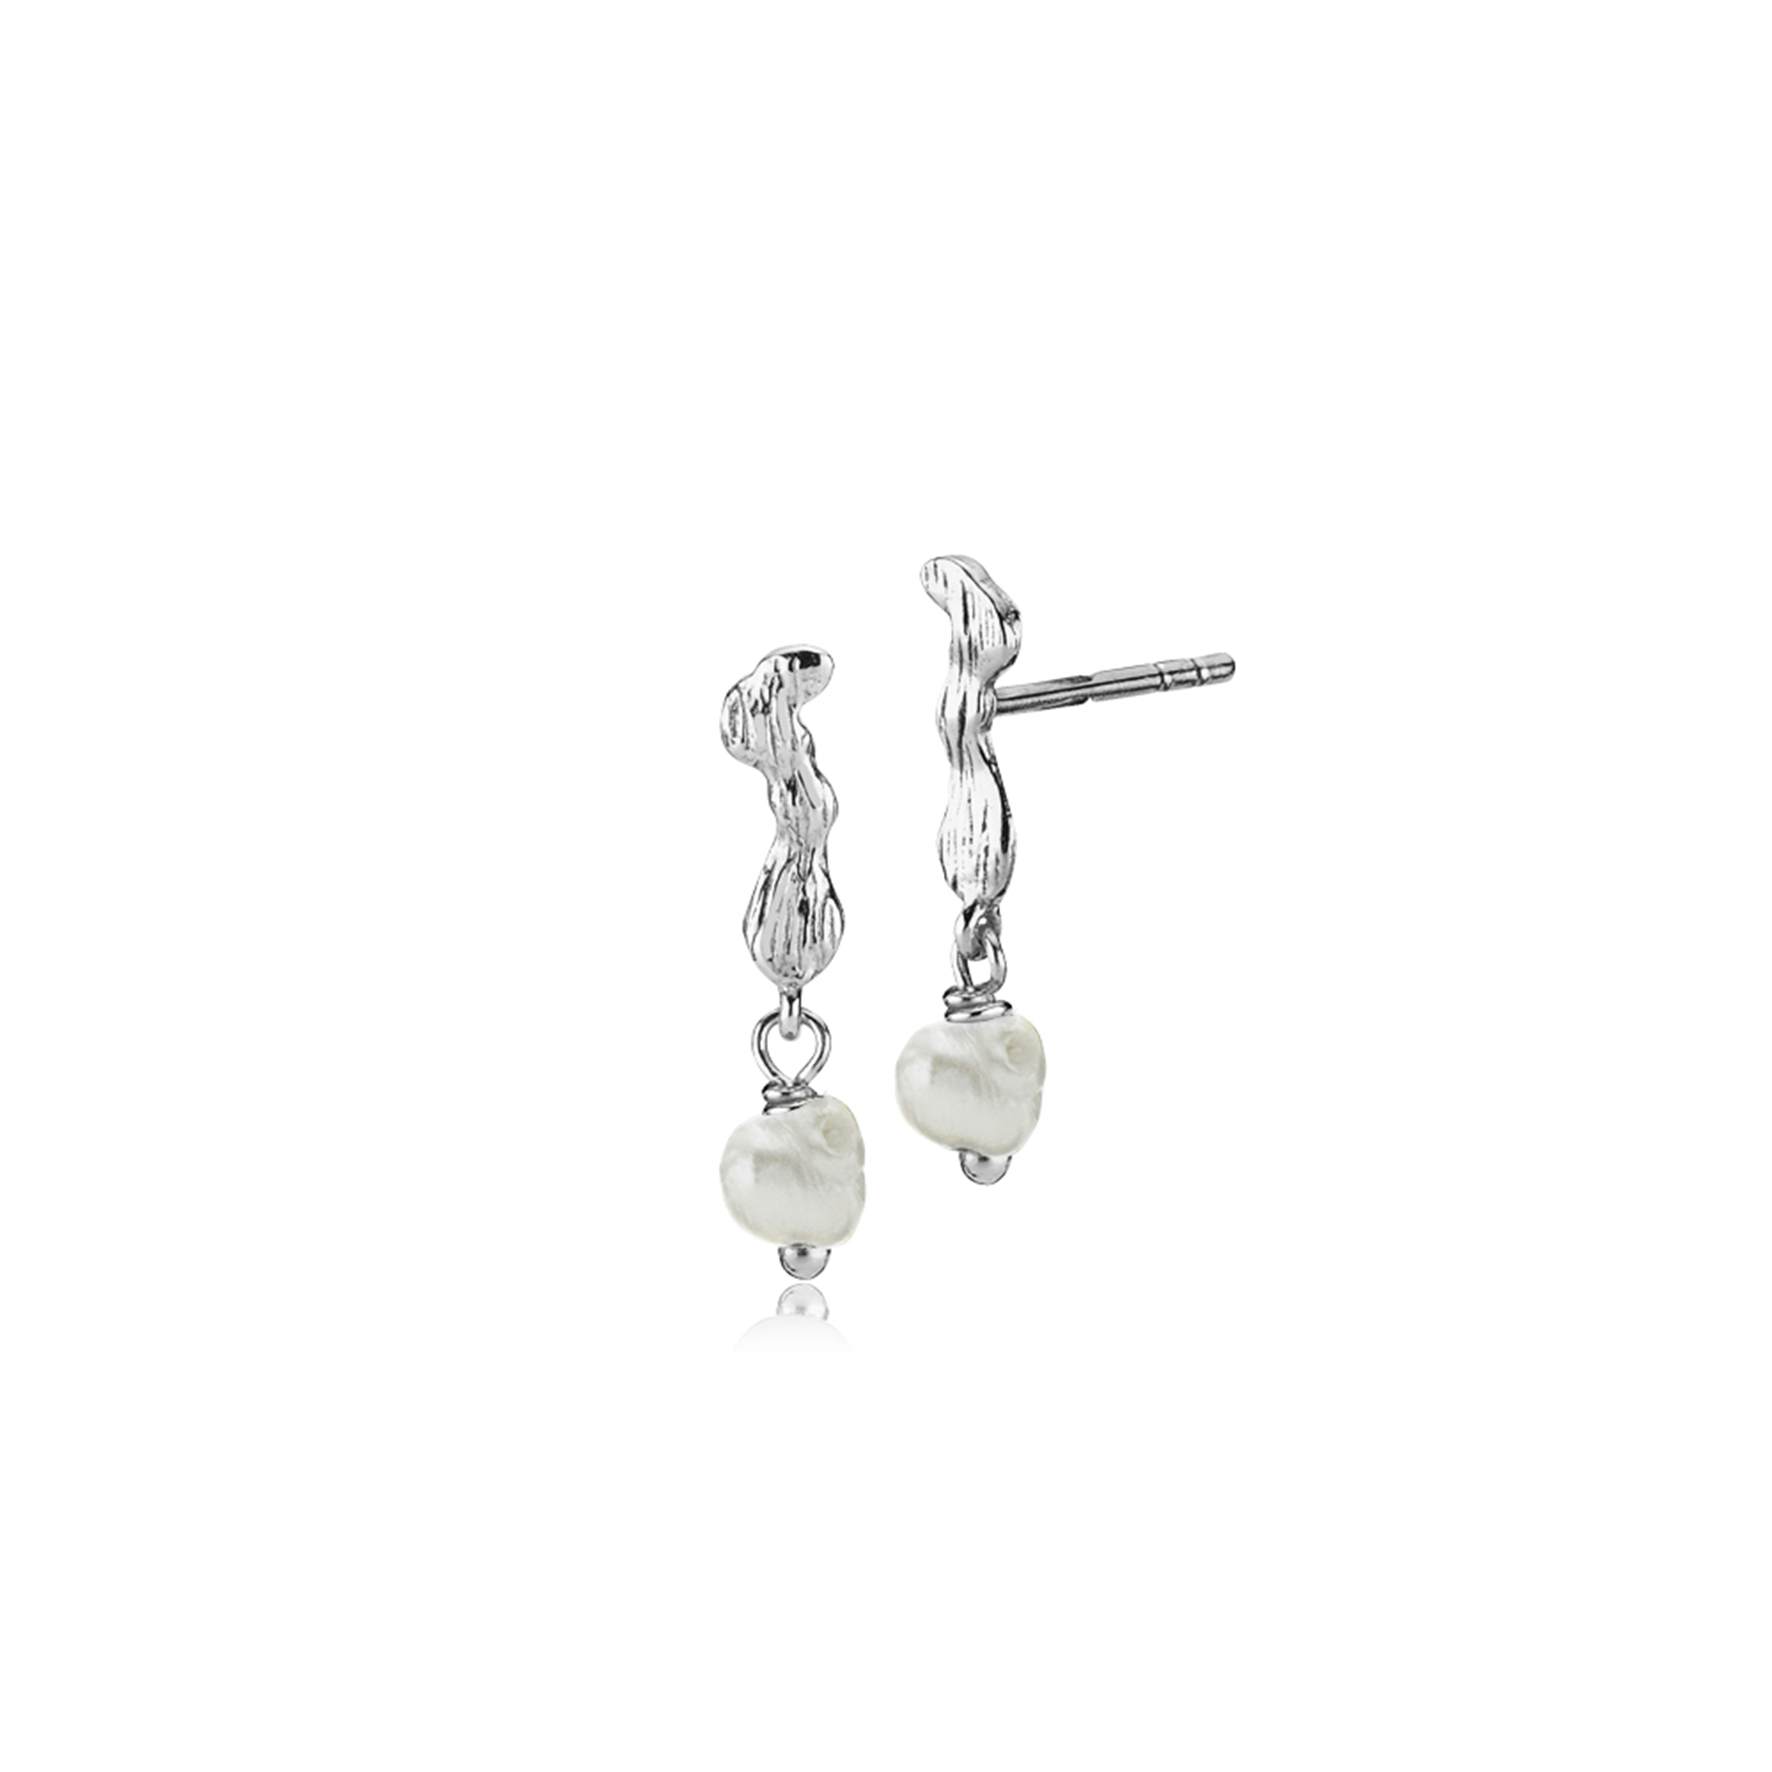 Lærke Bentsen By Sistie Earsticks Whit Pearls from Sistie in Silver Sterling 925|Freshwater Pearl